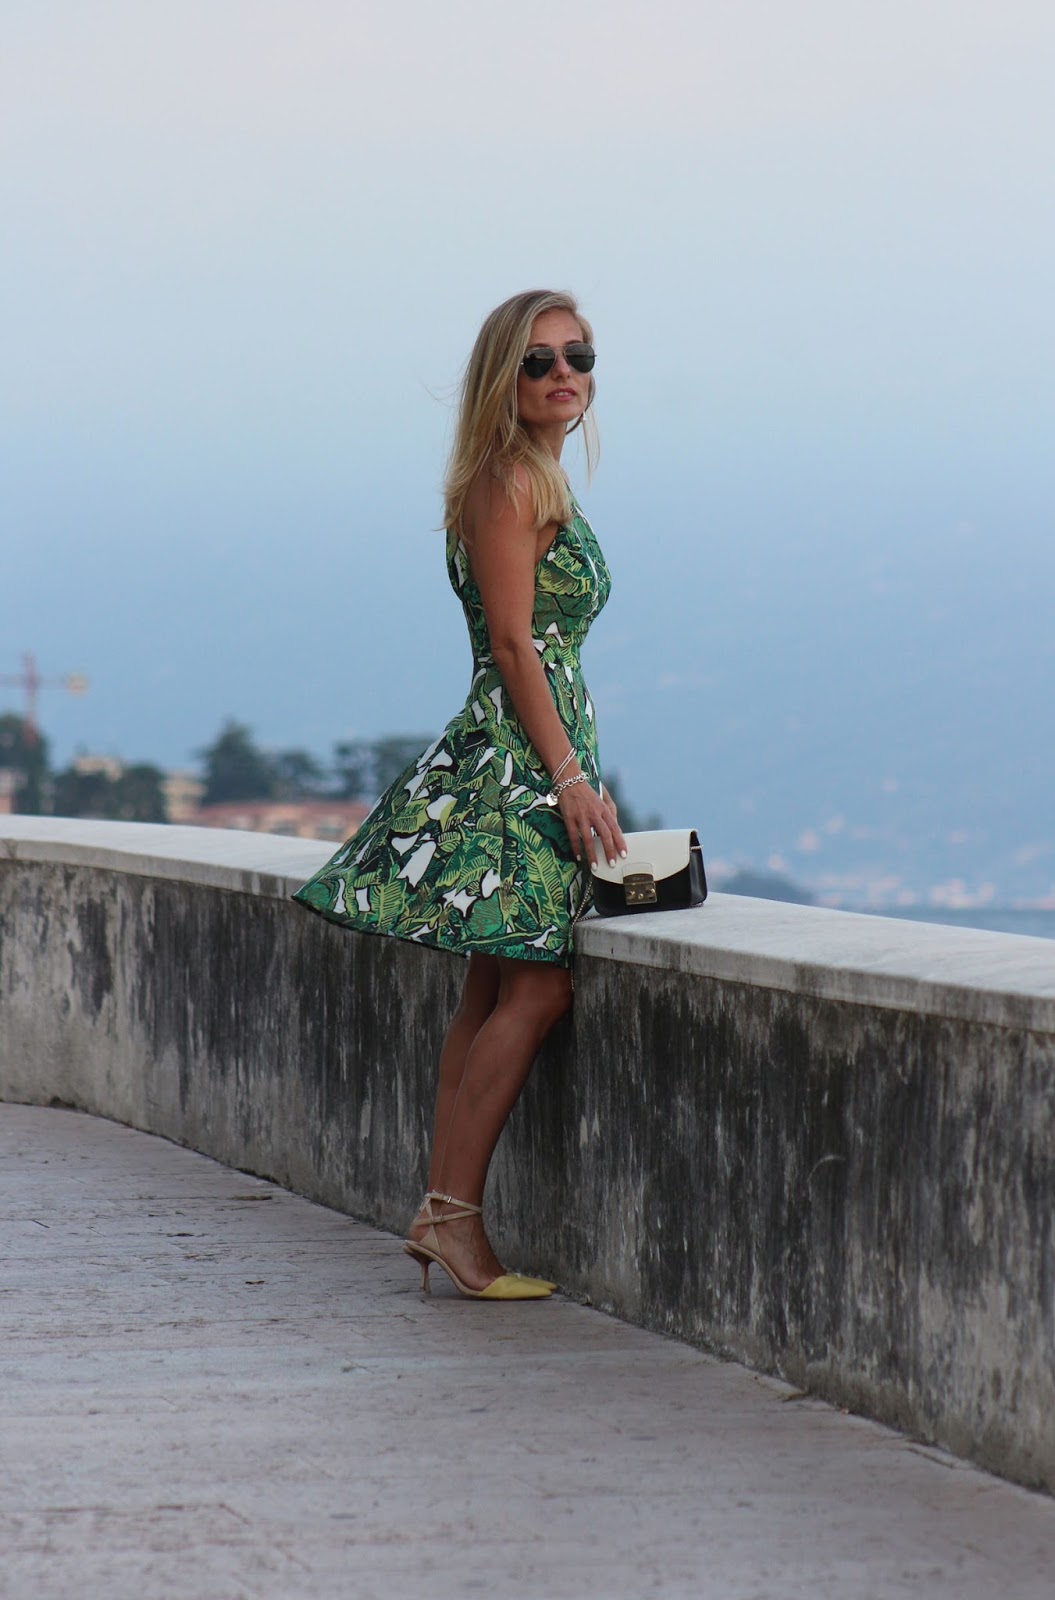 Eniwhere Fashion - SheIn Salò - Green dress